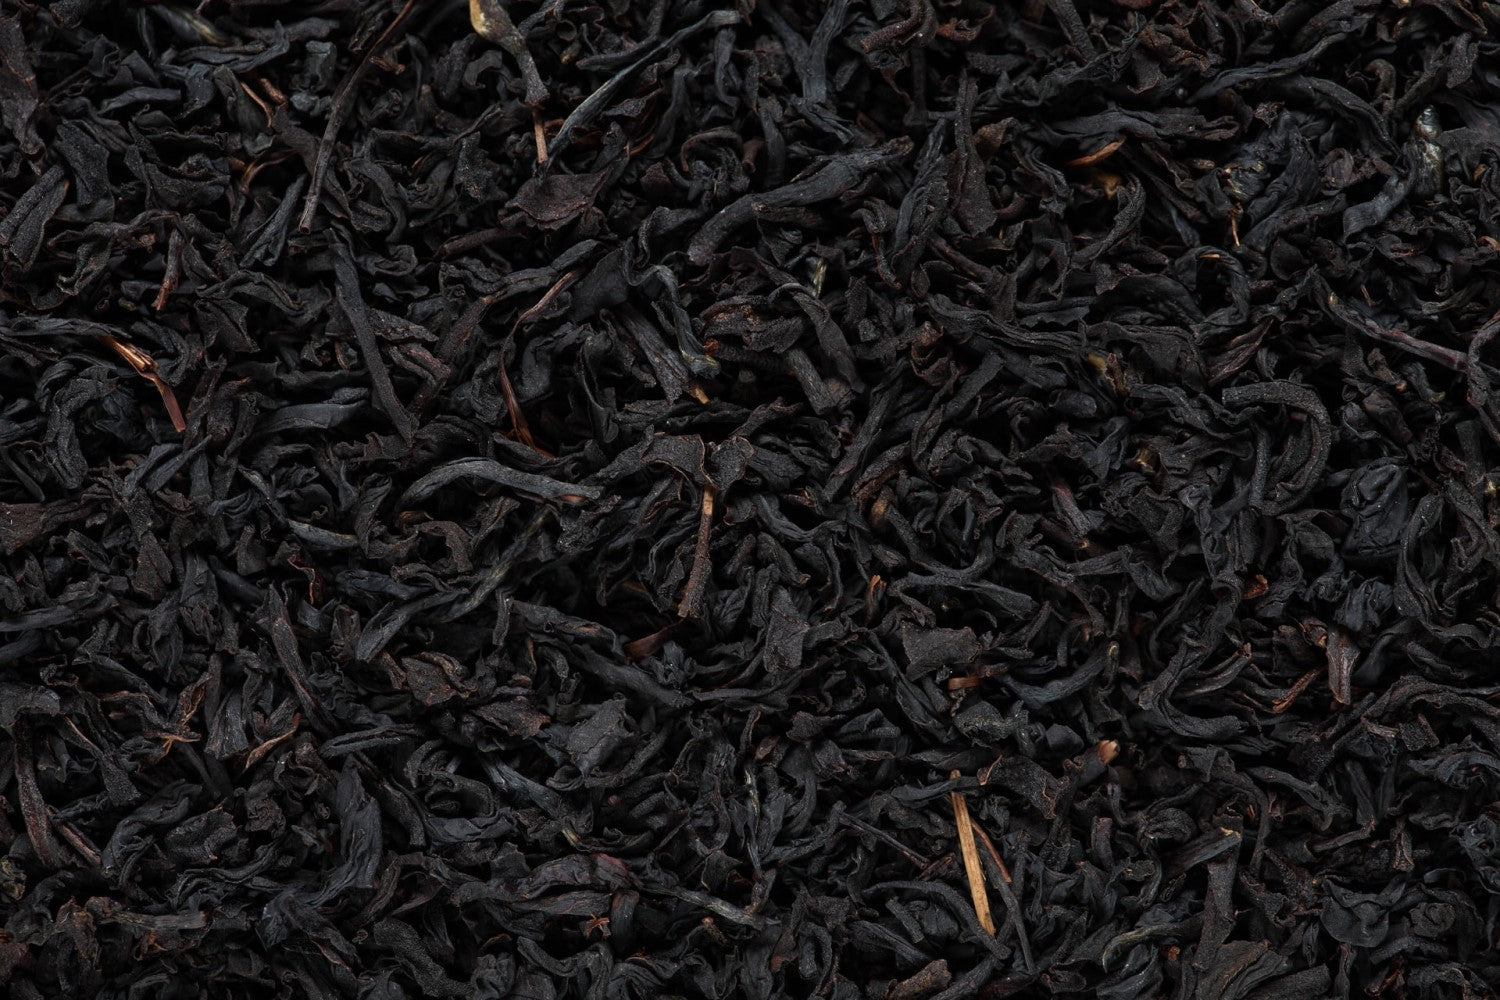 The Benefits Of Drinking Black Tea